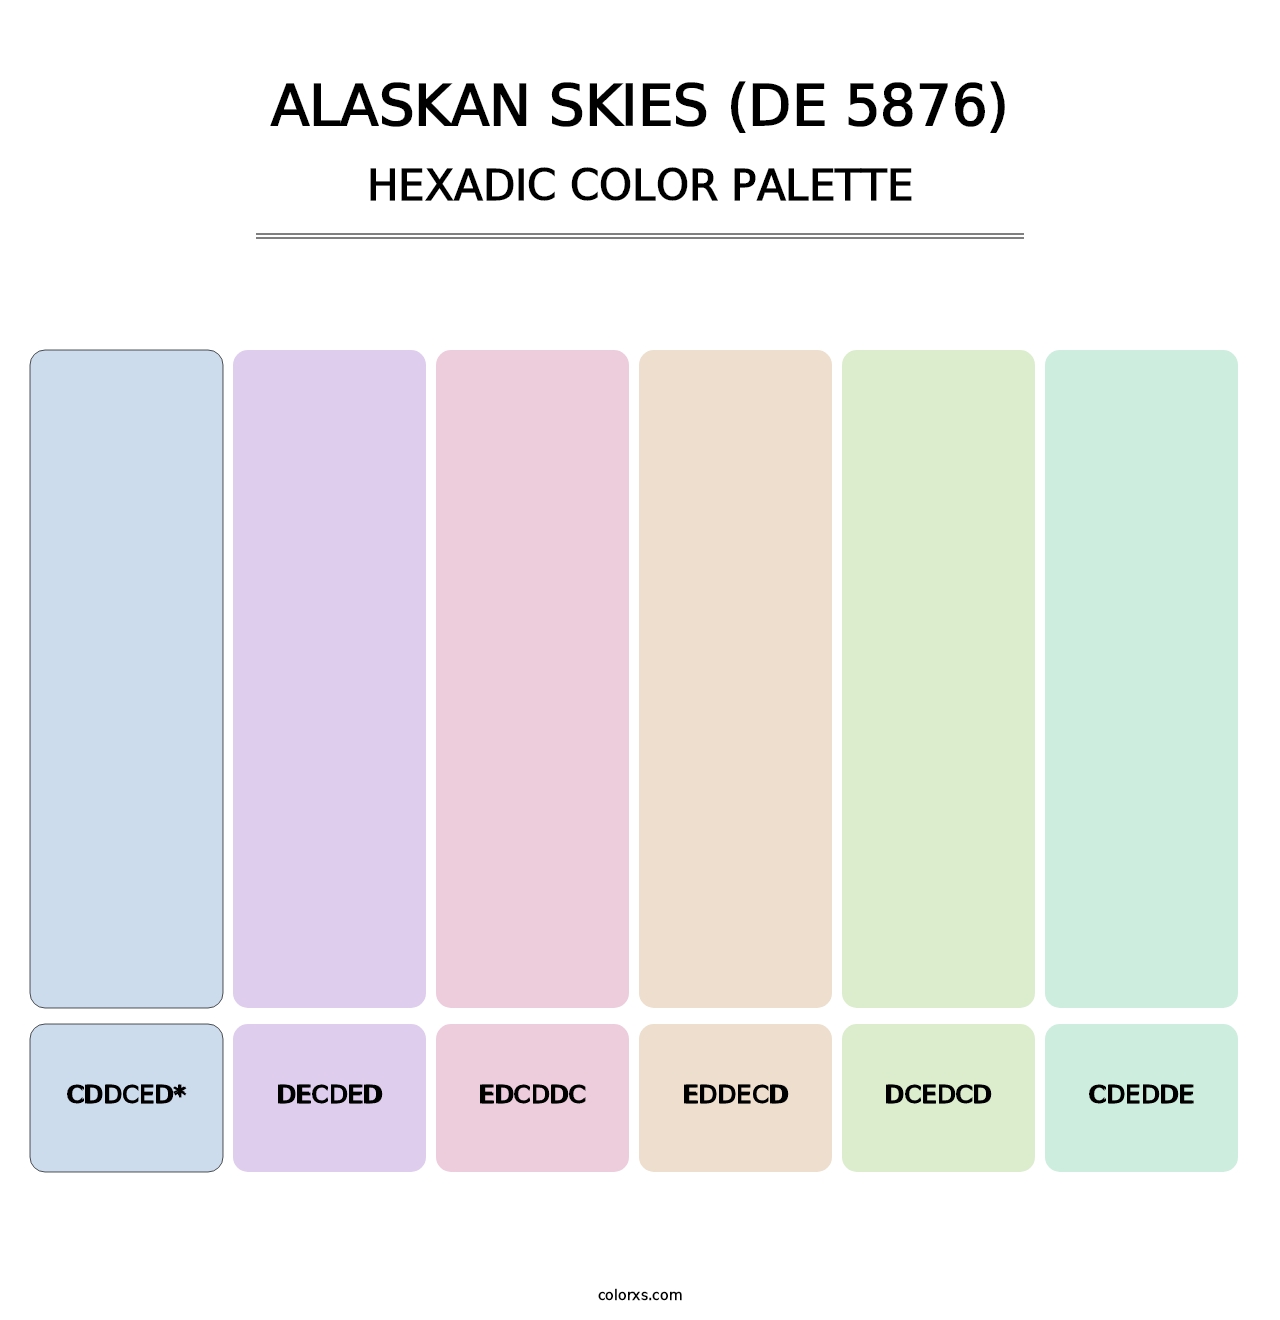 Alaskan Skies (DE 5876) - Hexadic Color Palette